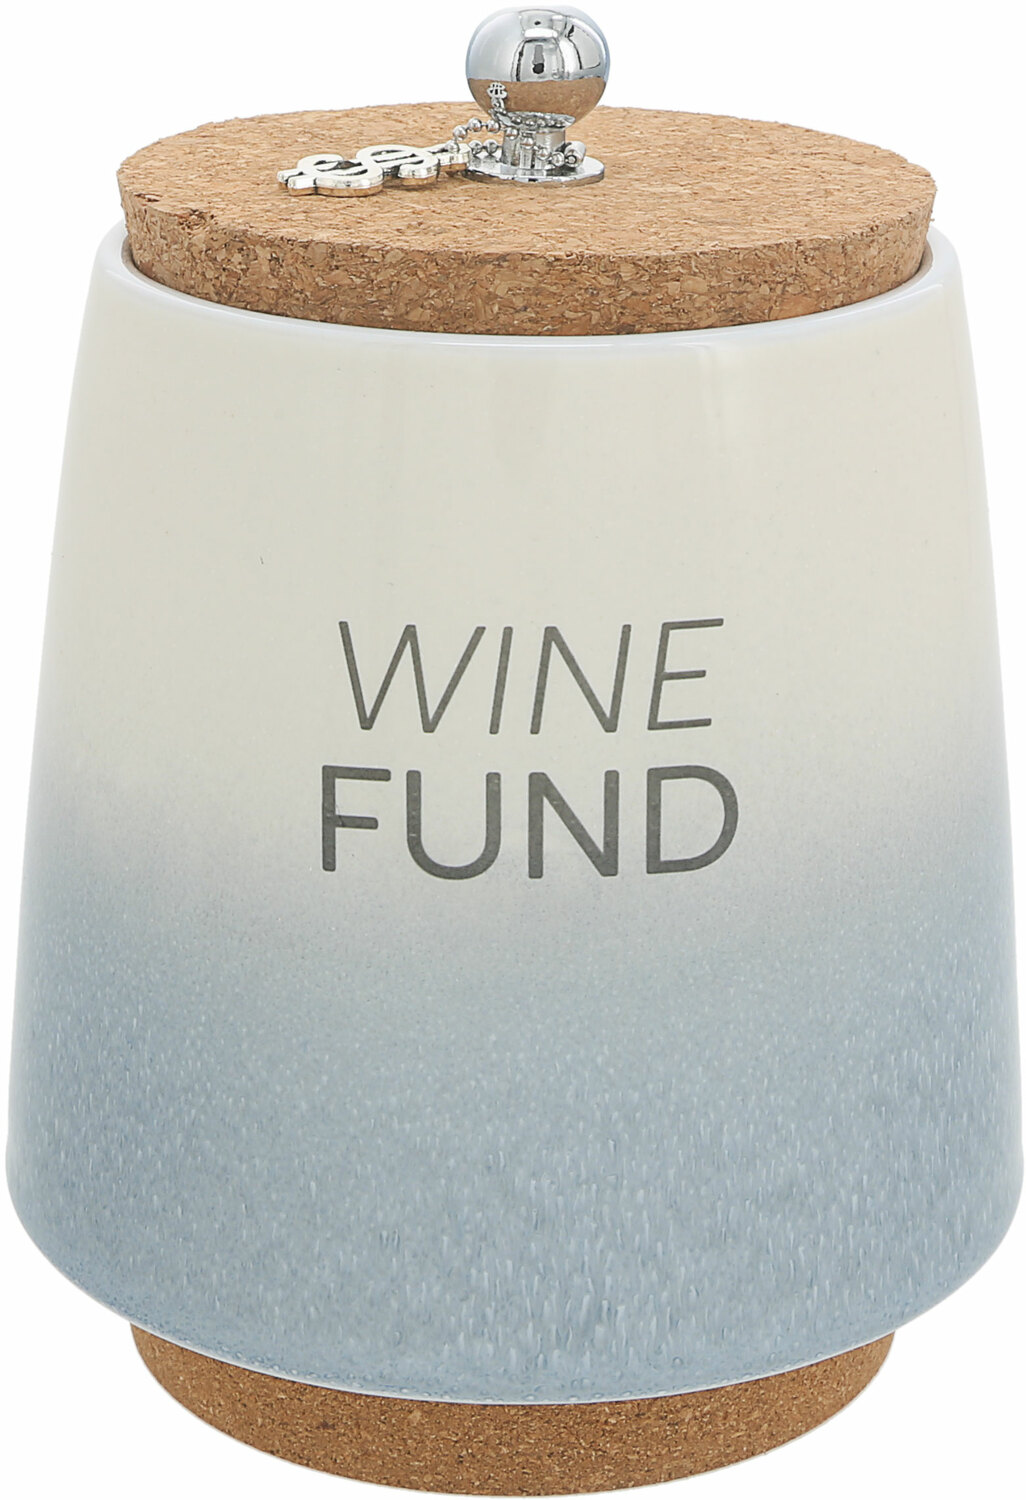 Wine by So Much Fun-d - Wine - 6.5" Ceramic Savings Bank